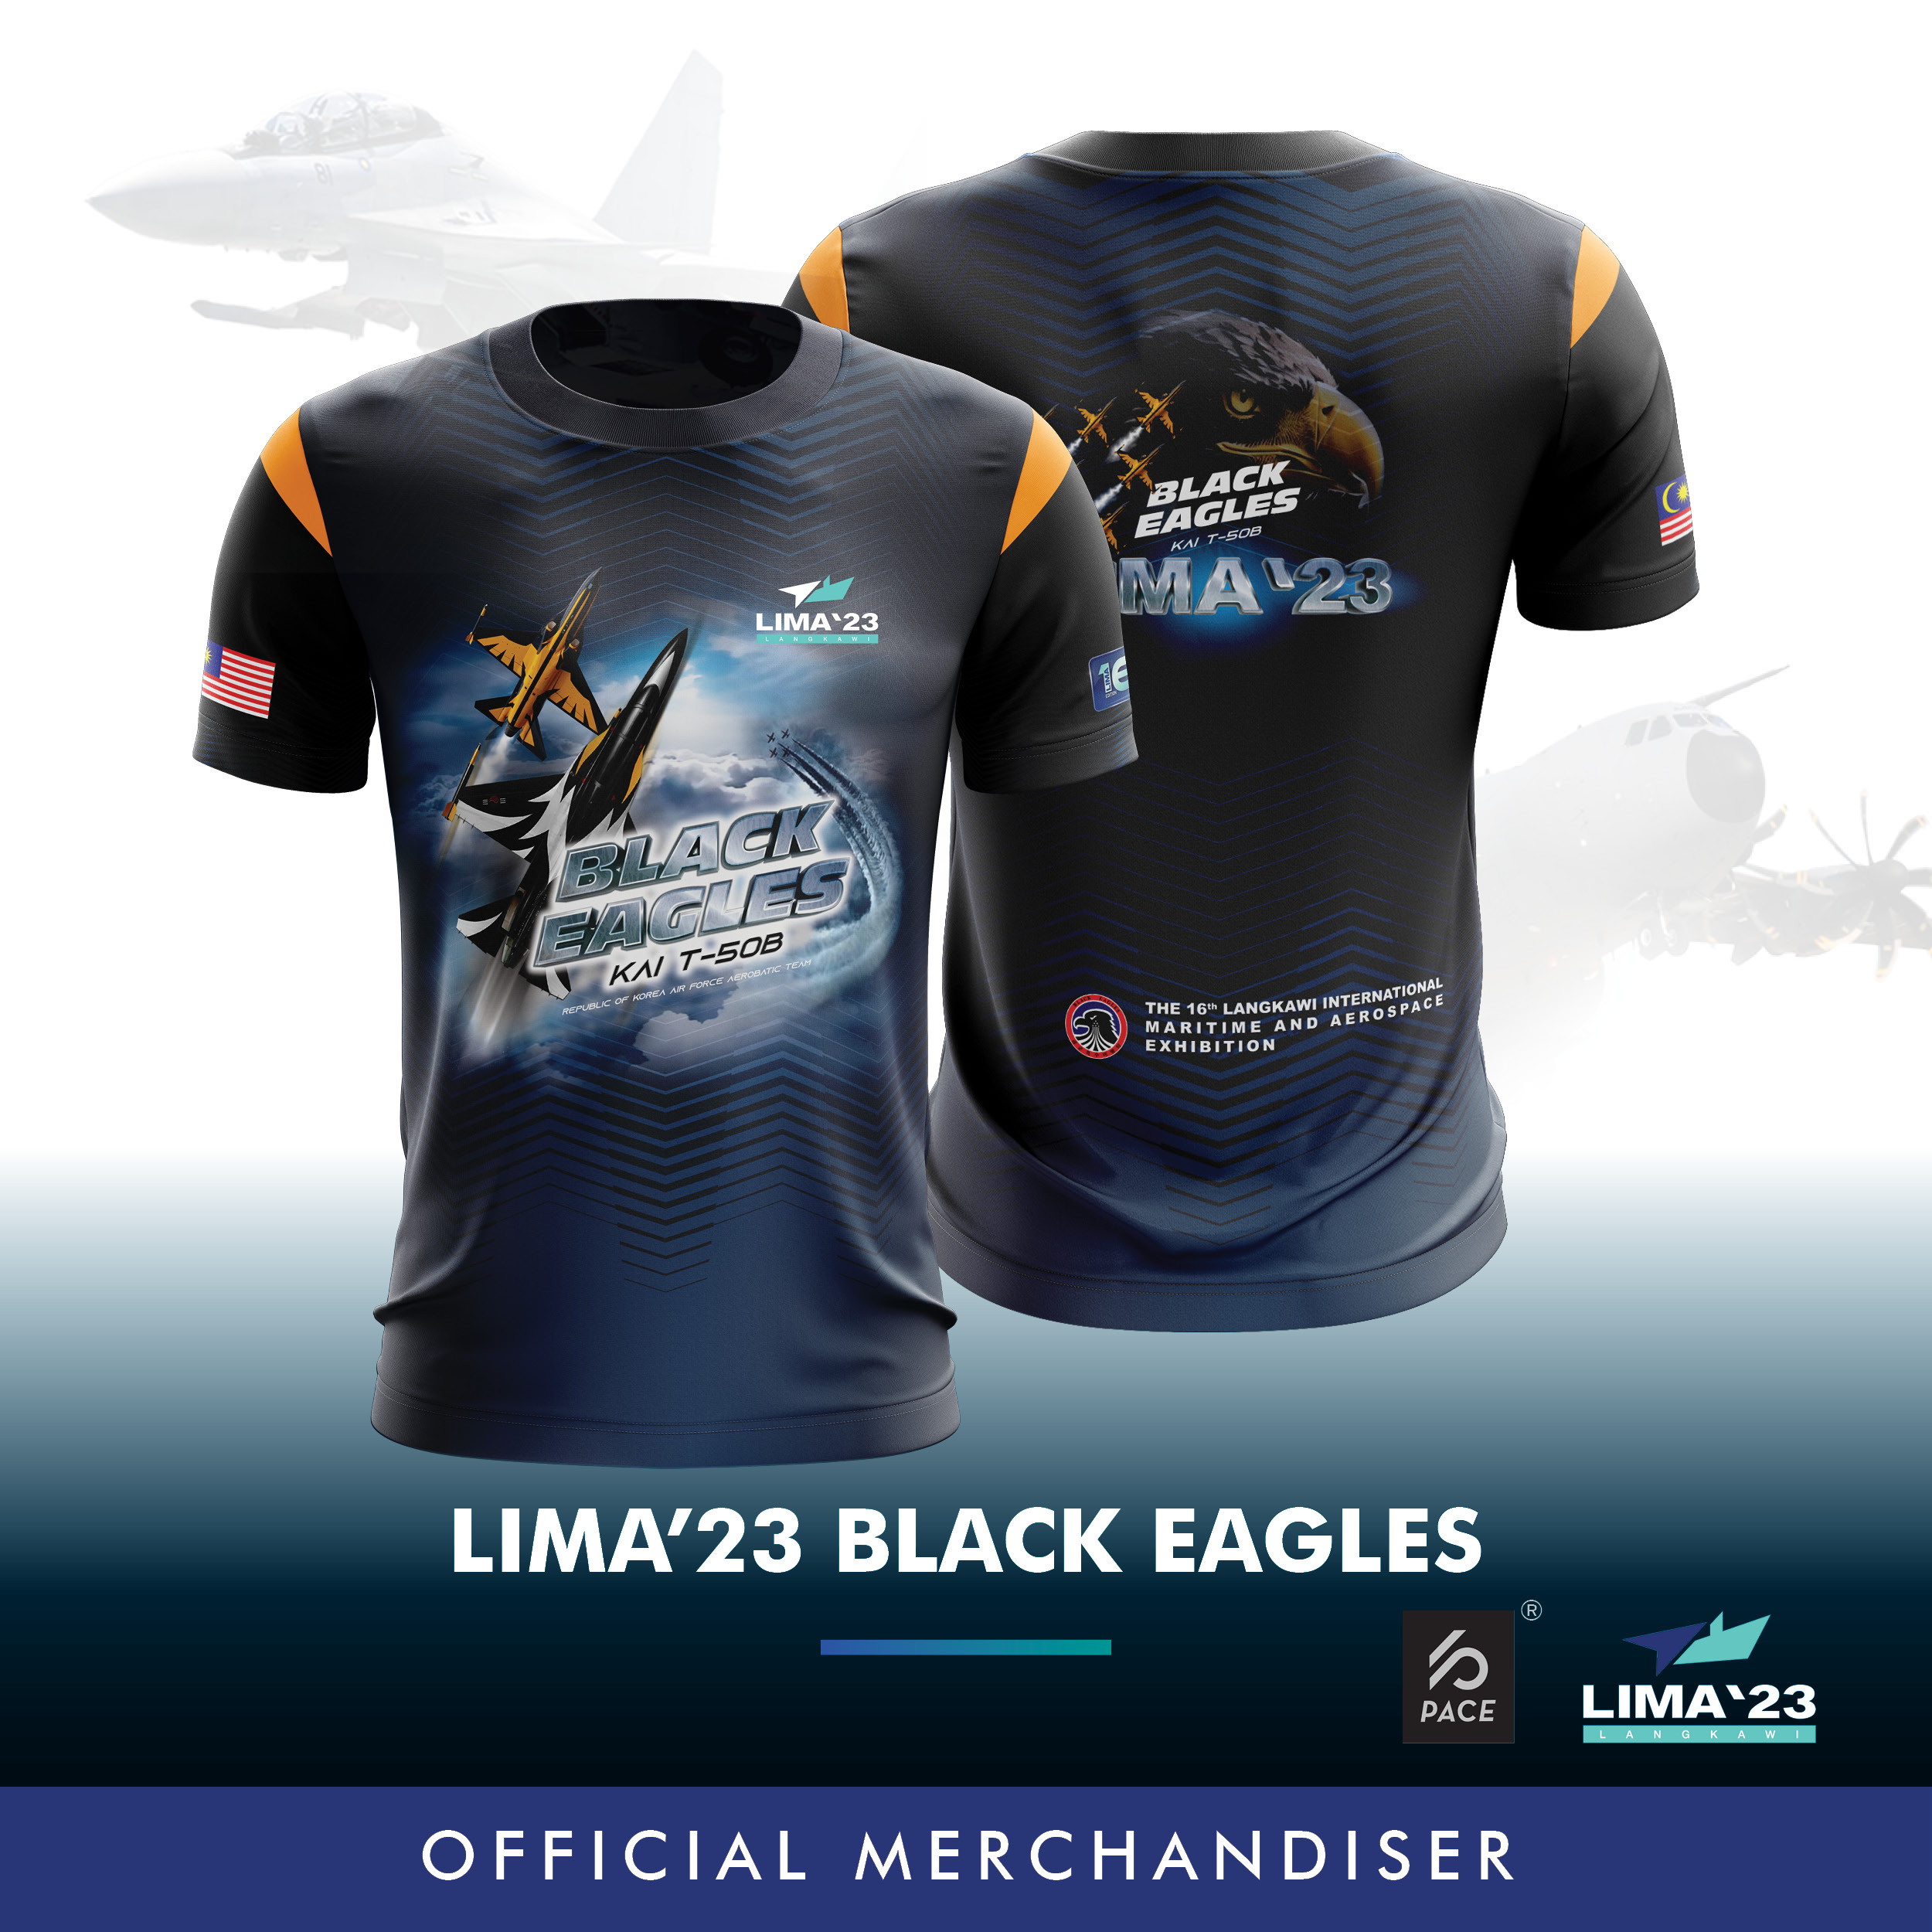 LIMA'23 Black Eagles